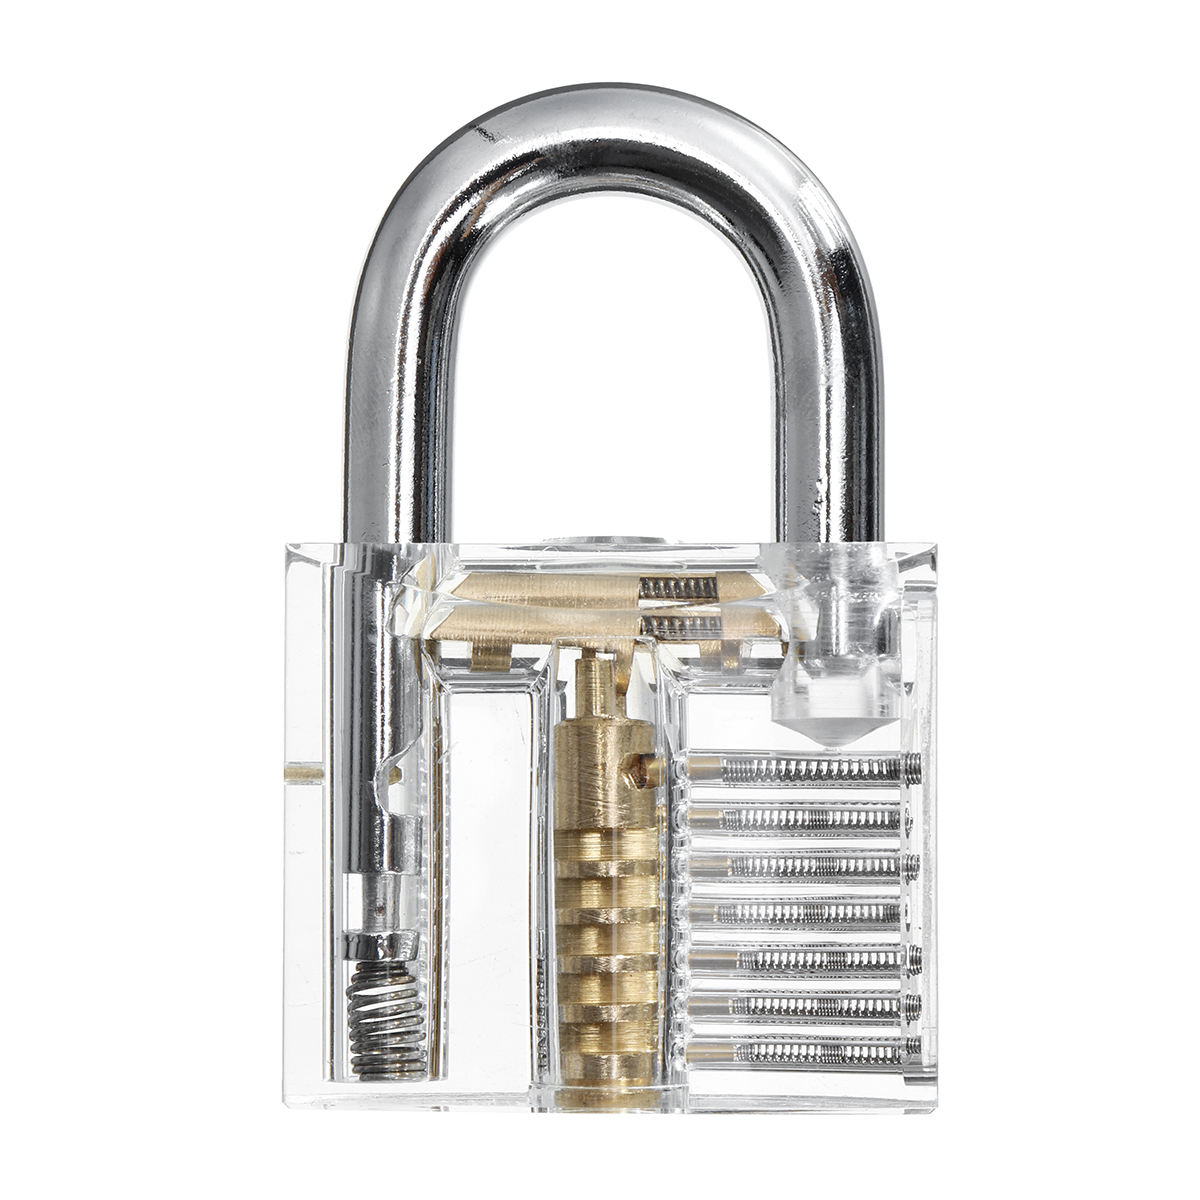 Find 14Pcs Training Unlock Tool Skill Set Unlocking Lock Picks Set Key Transparent Practical Lock for Sale on Gipsybee.com with cryptocurrencies